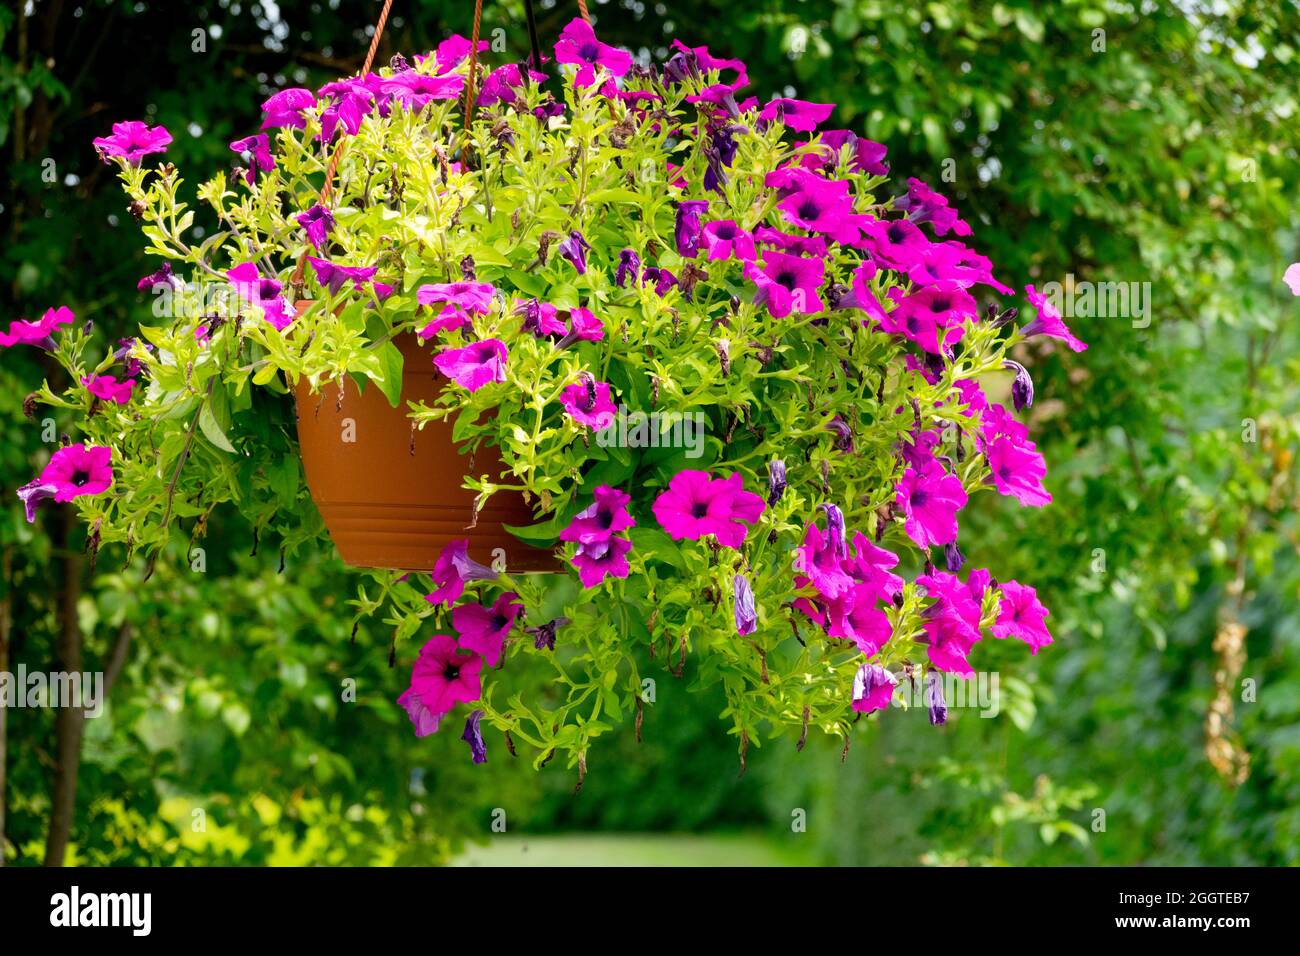 Rosa Petunien in Topf, hängenden Korb Garten Durchgang gut außerhalb Platz Stockfoto